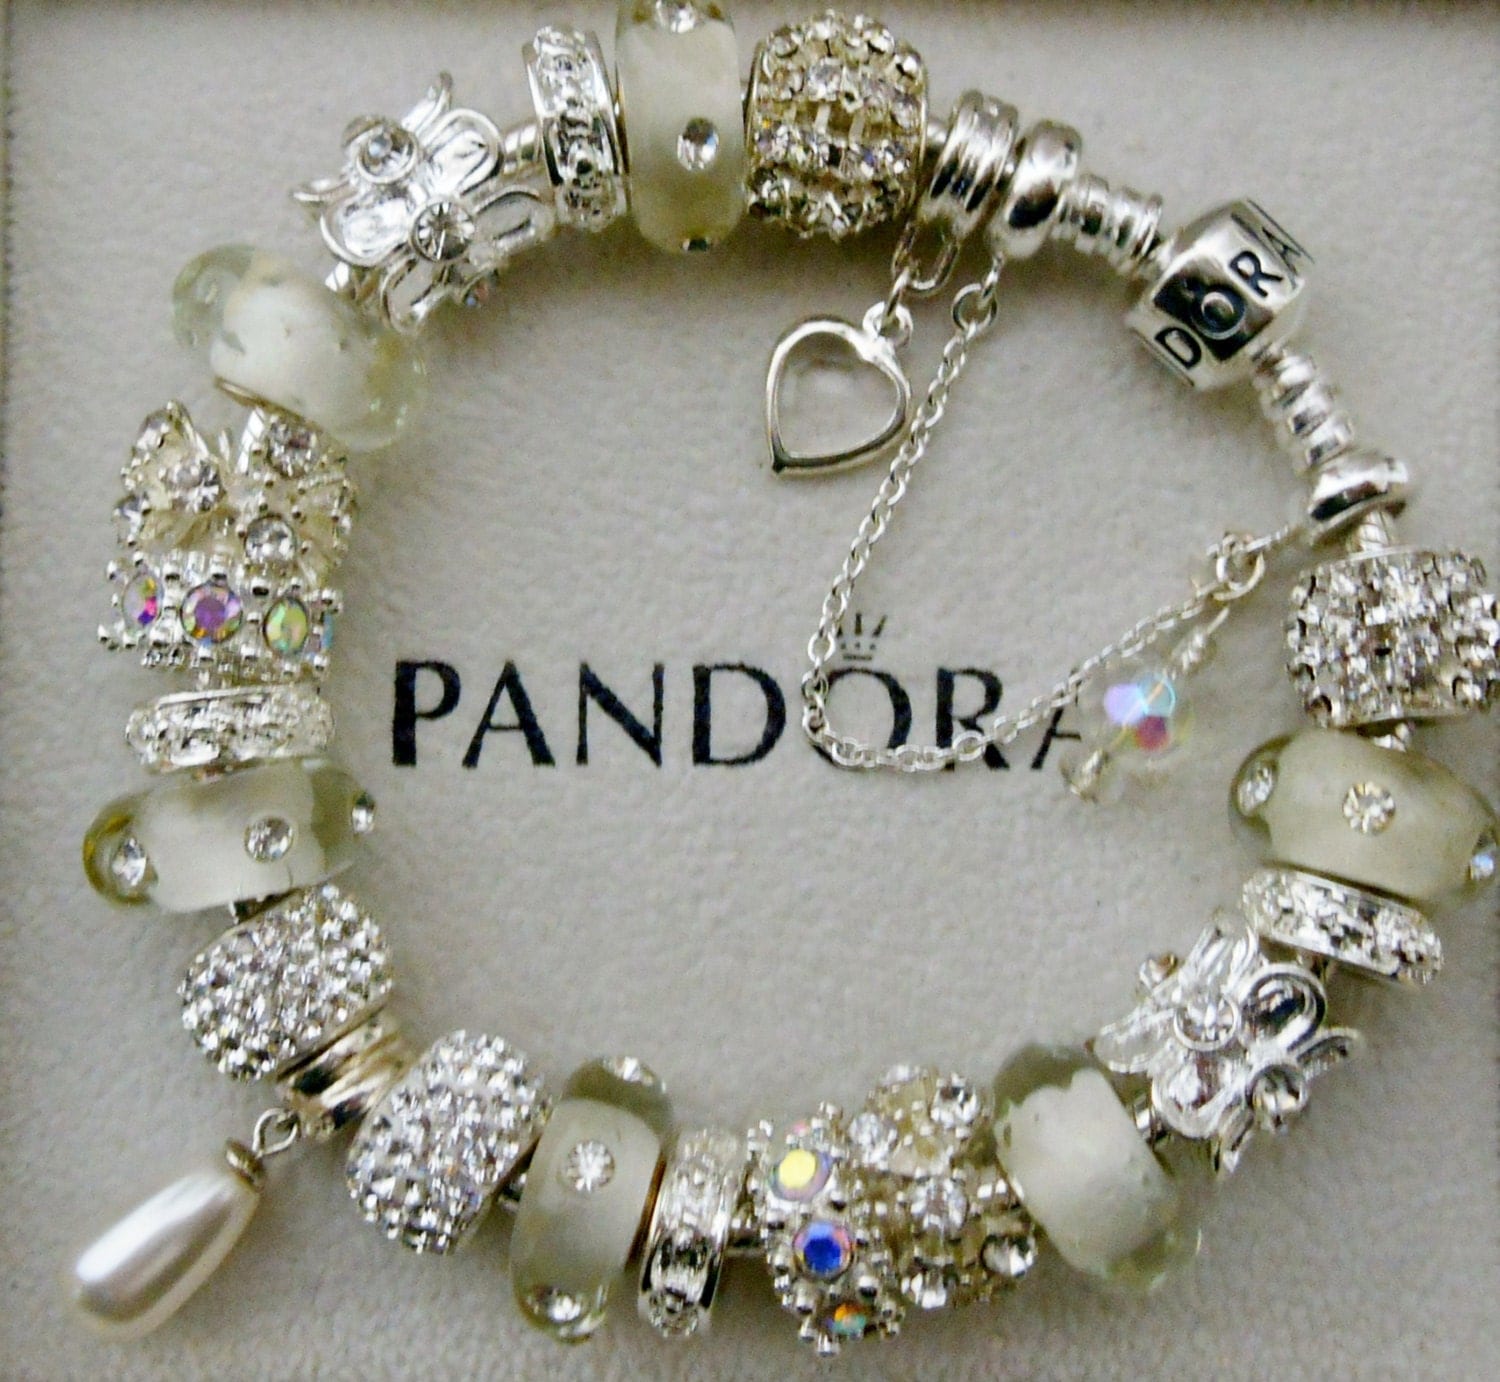 Authentic Pandora Bracelet or unbranded European charm